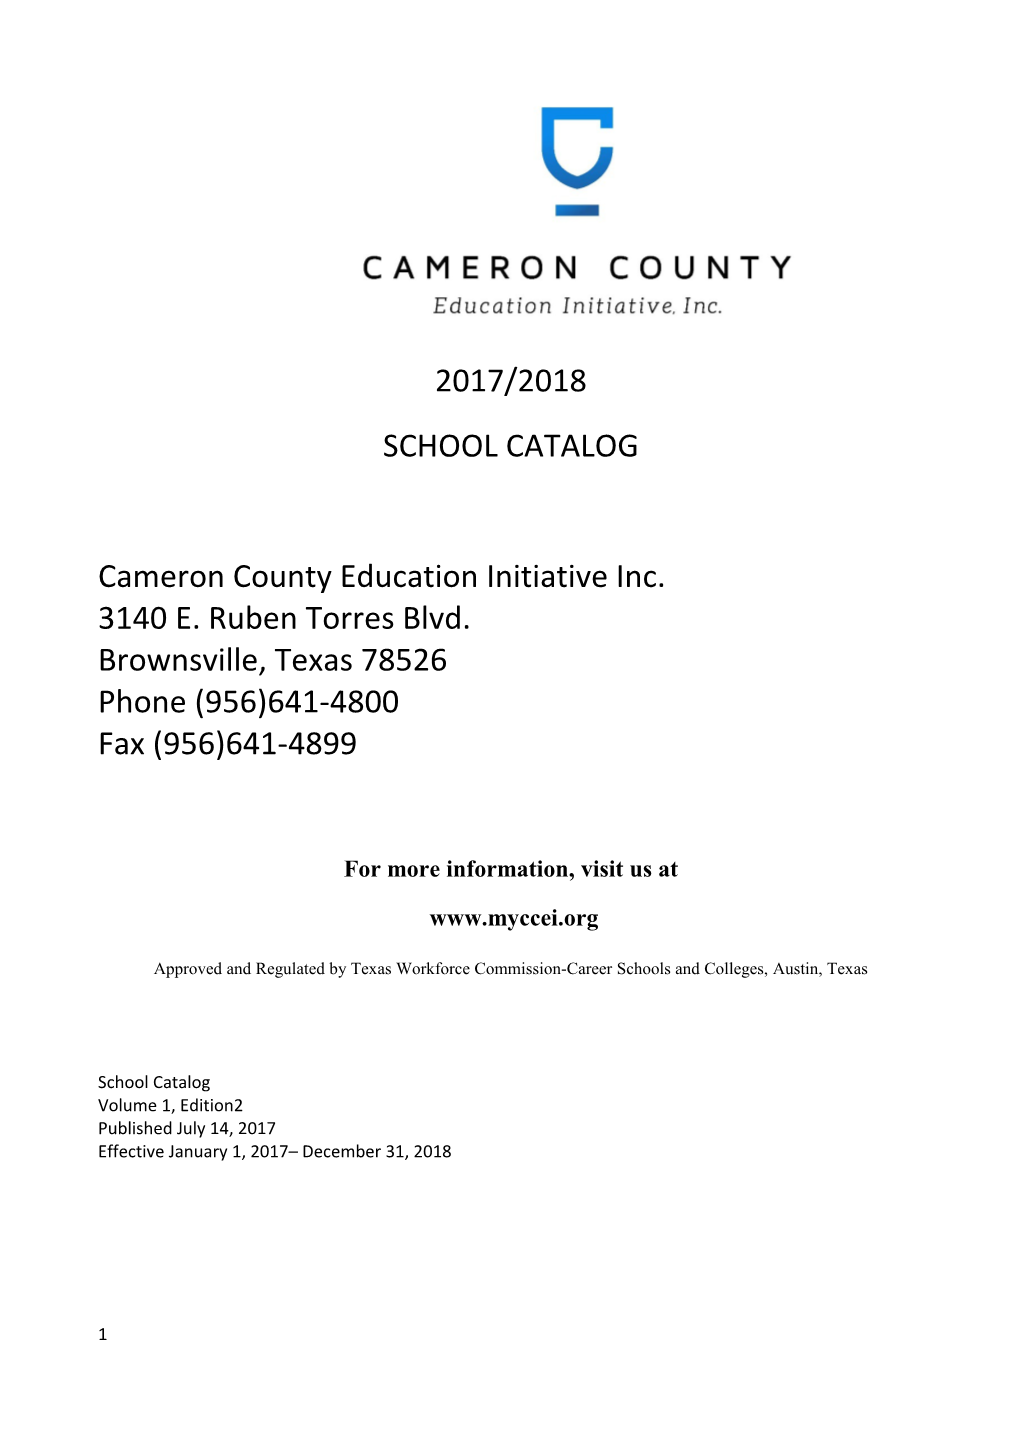 Cameron County Education Initiative Inc